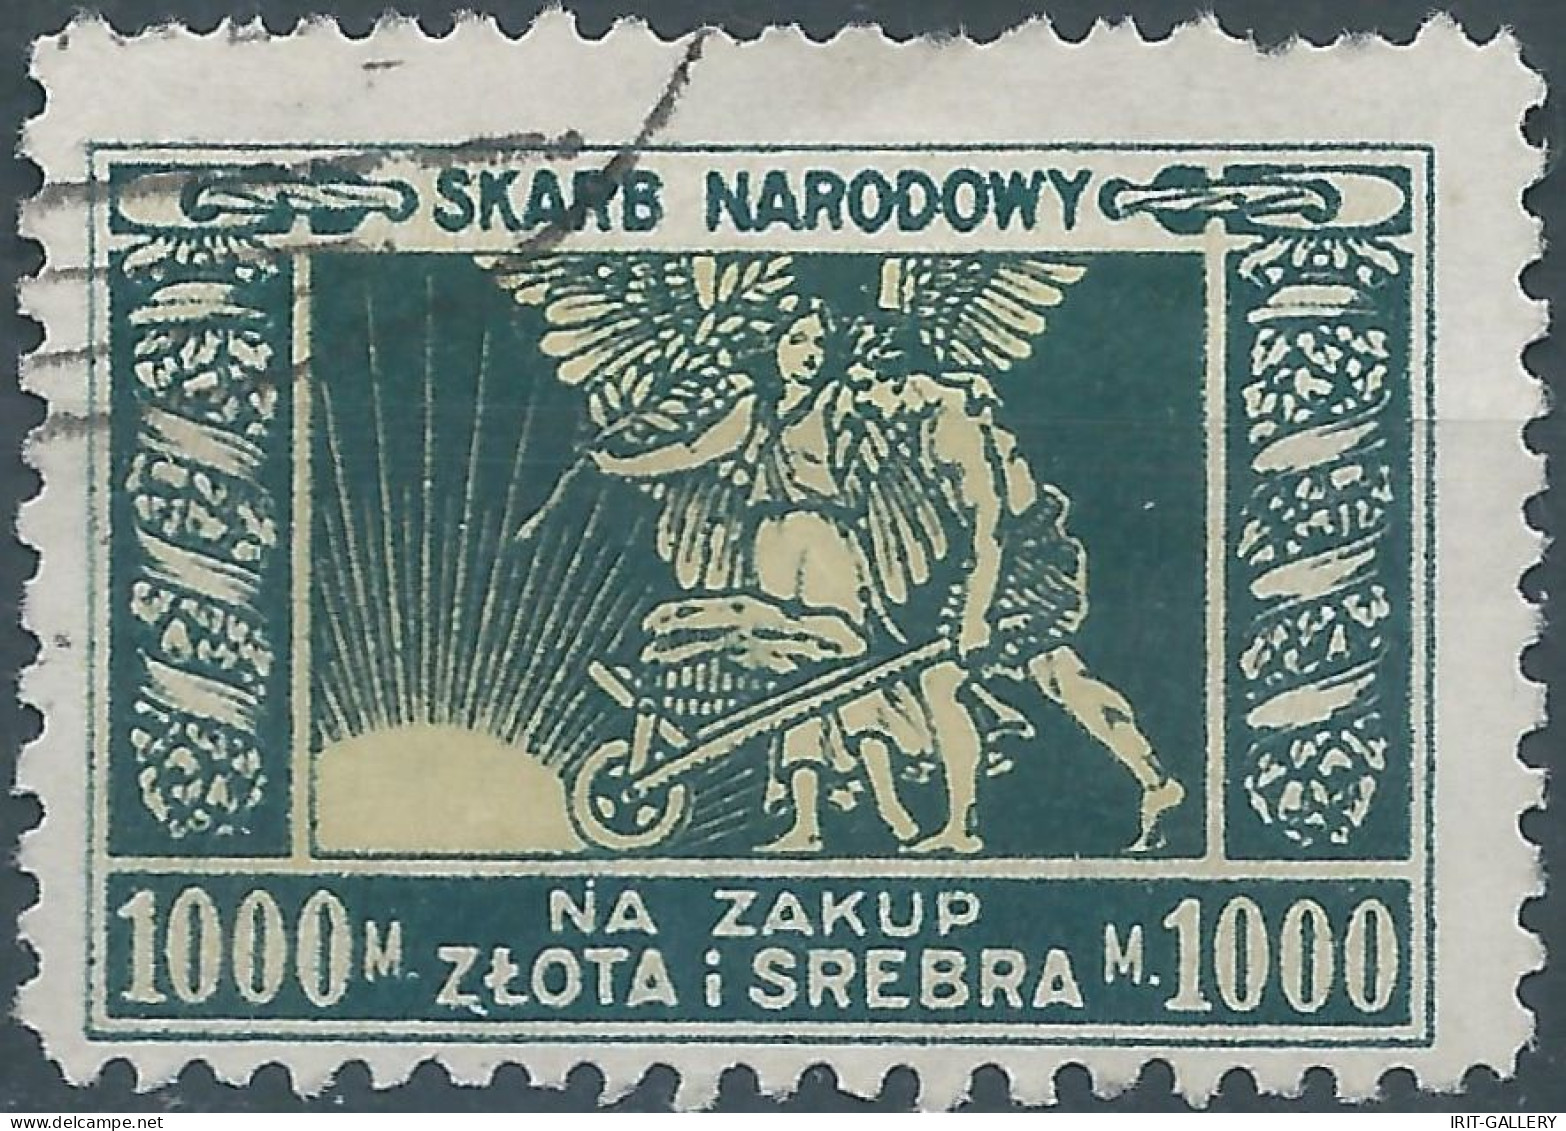 POLONIA-POLAND-POLSKA,1920 Revenue Stamp SKARB NARODOWY NA ZAKUP ZLOTA I SREBRA-NATIONAL TREASURE,1000M,Obliterated - Steuermarken